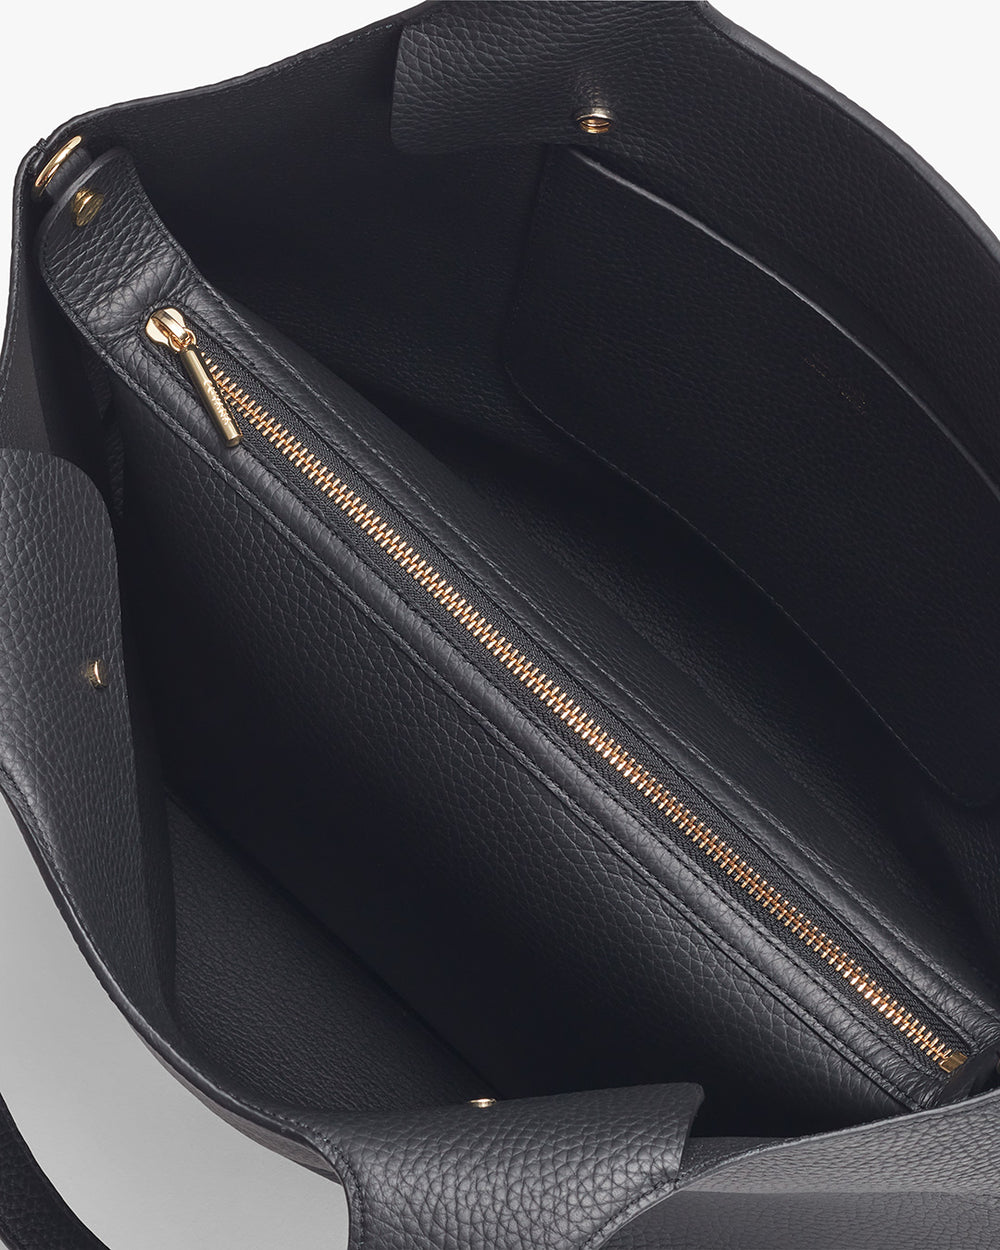 Open handbag with interior zipper pocket visible.